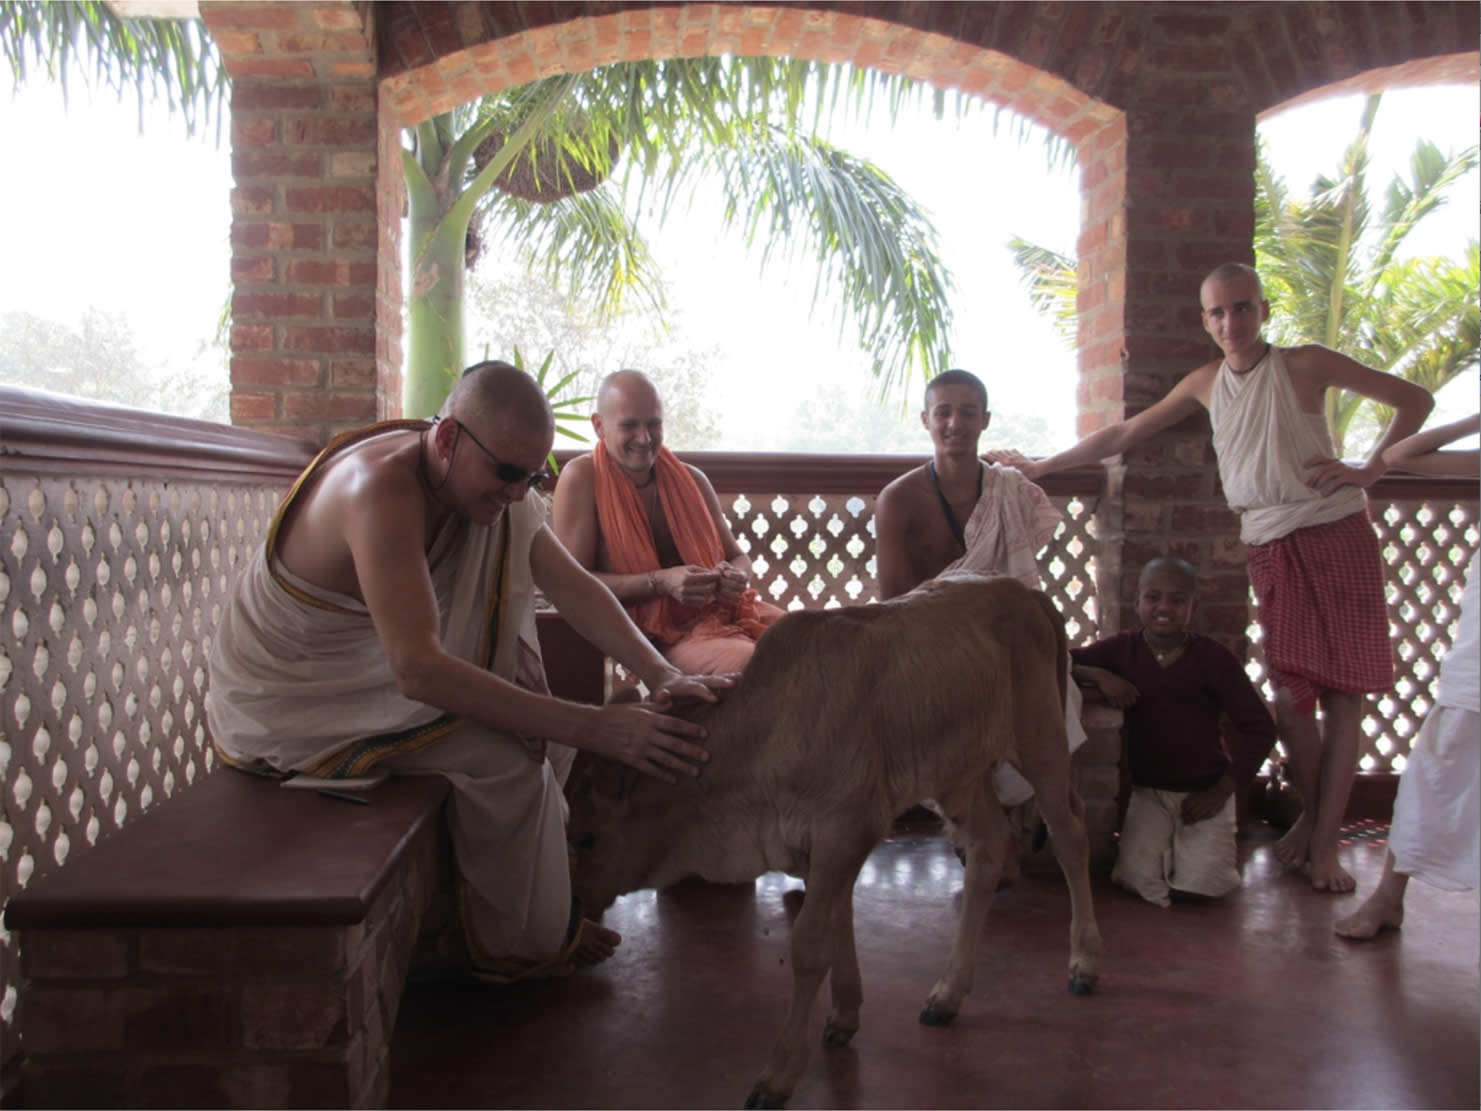 author caessing calf at gurukula